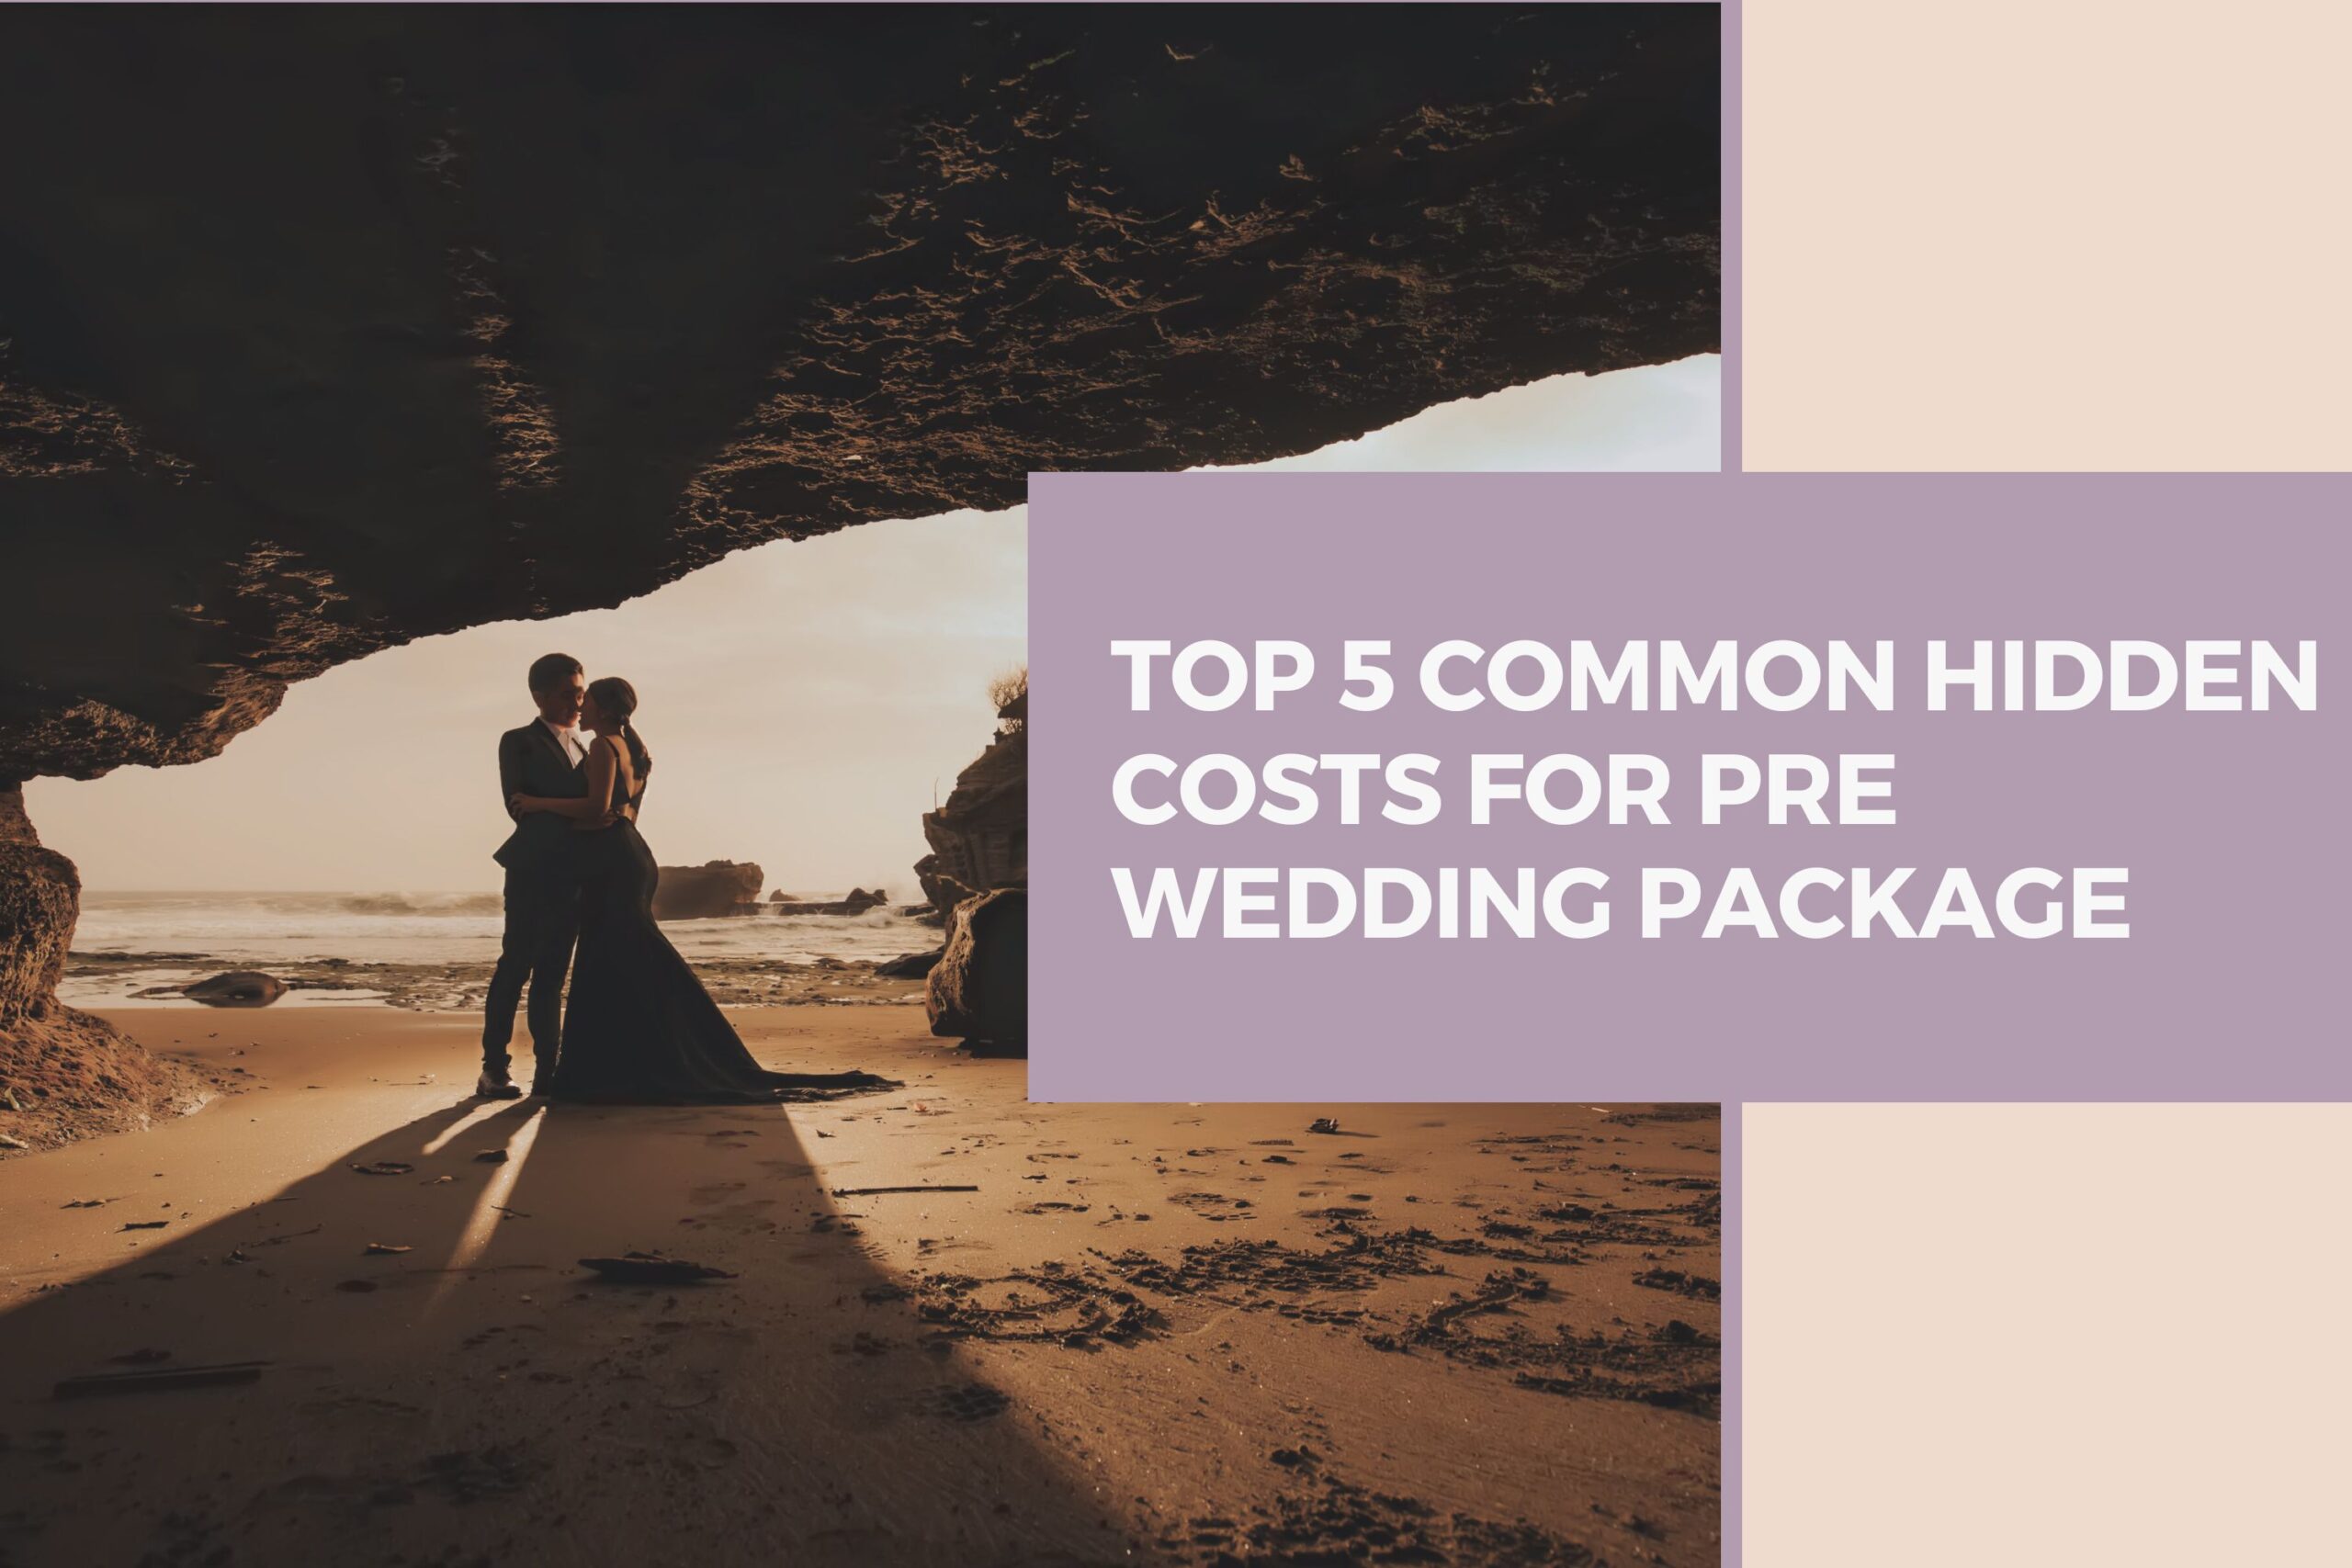 Top 5 Common Hidden Costs for Pre Wedding Package